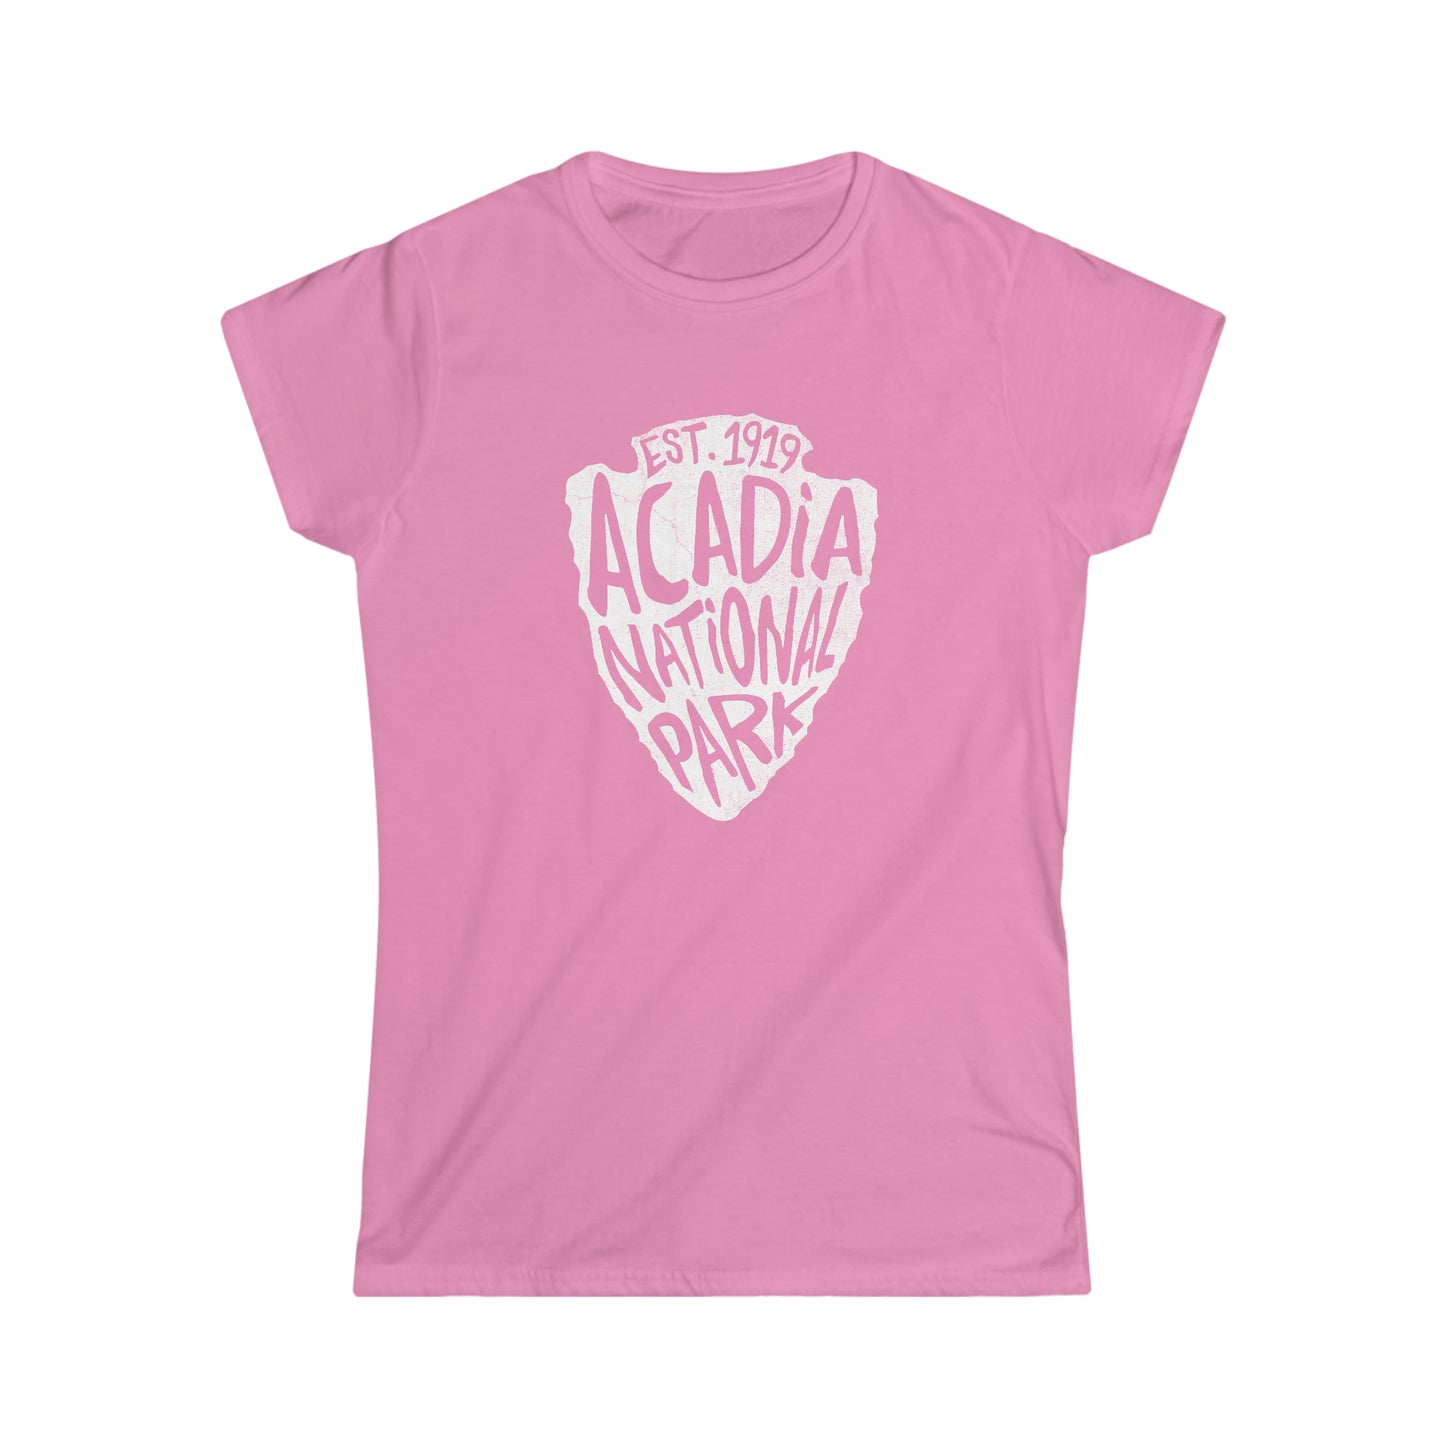 Acadia National Park Women's T-Shirt - Arrowhead Design